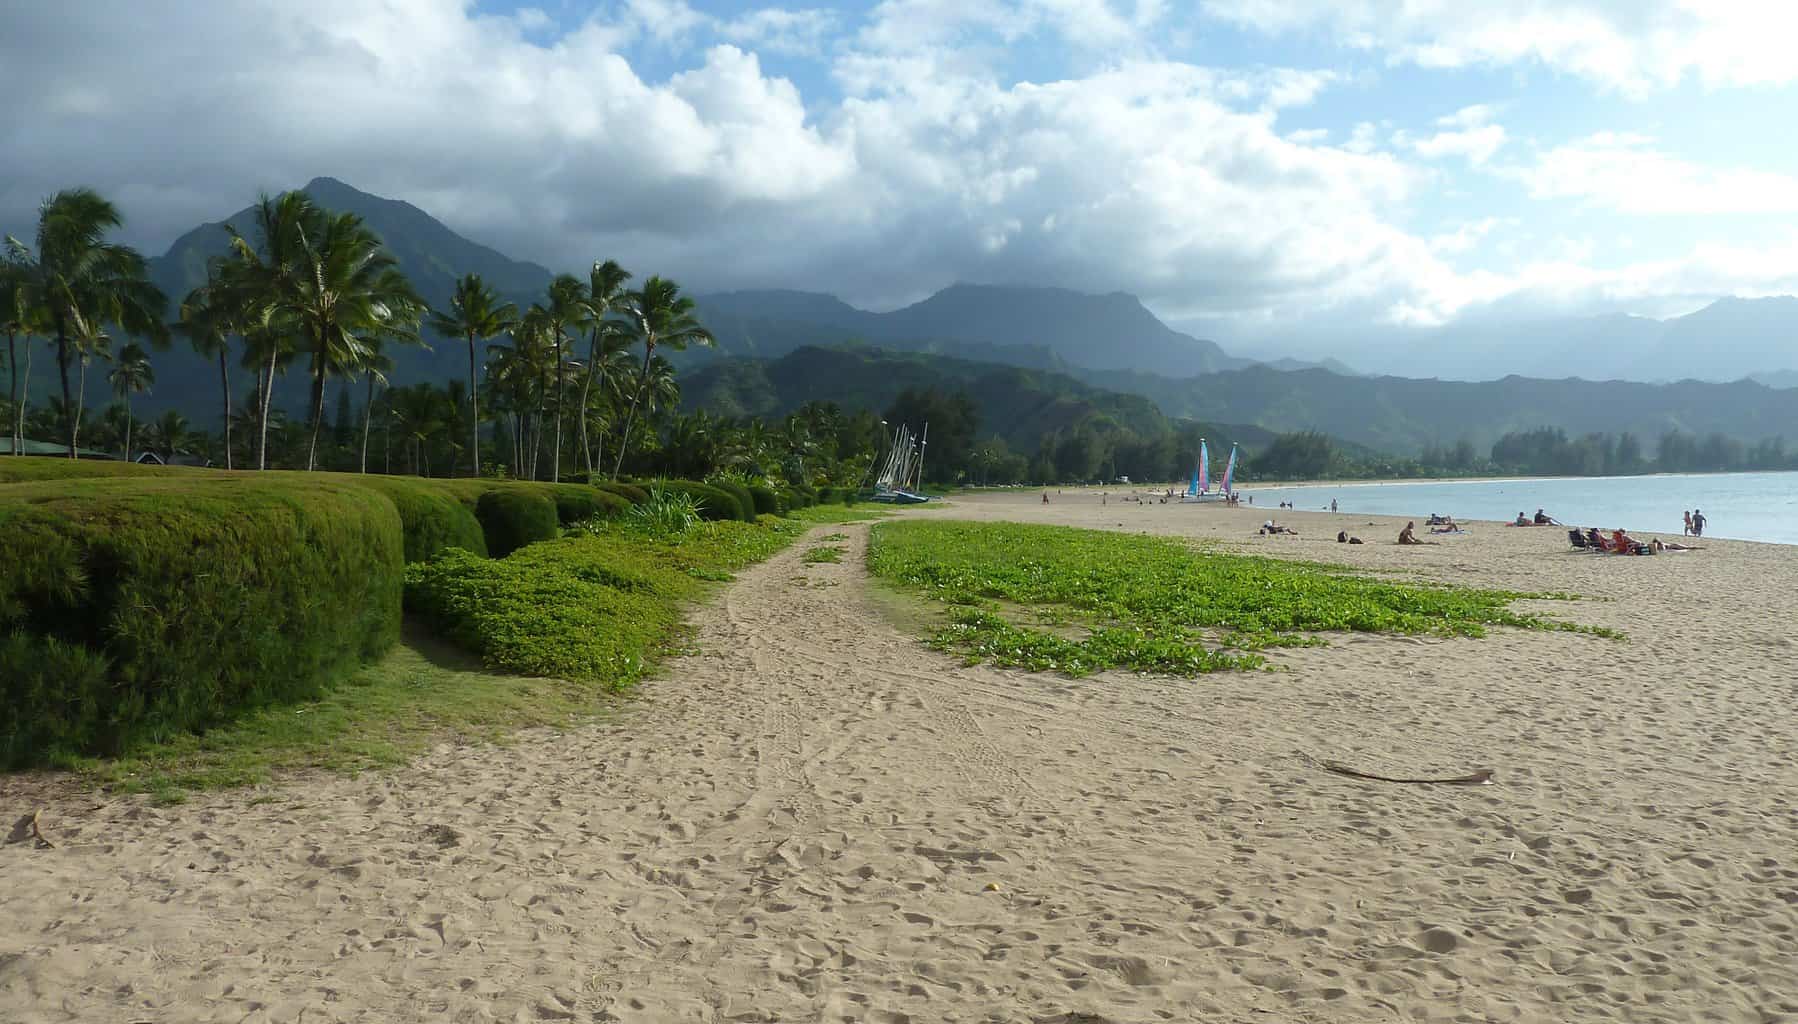 Kauai Locations From the Movie The Descendants